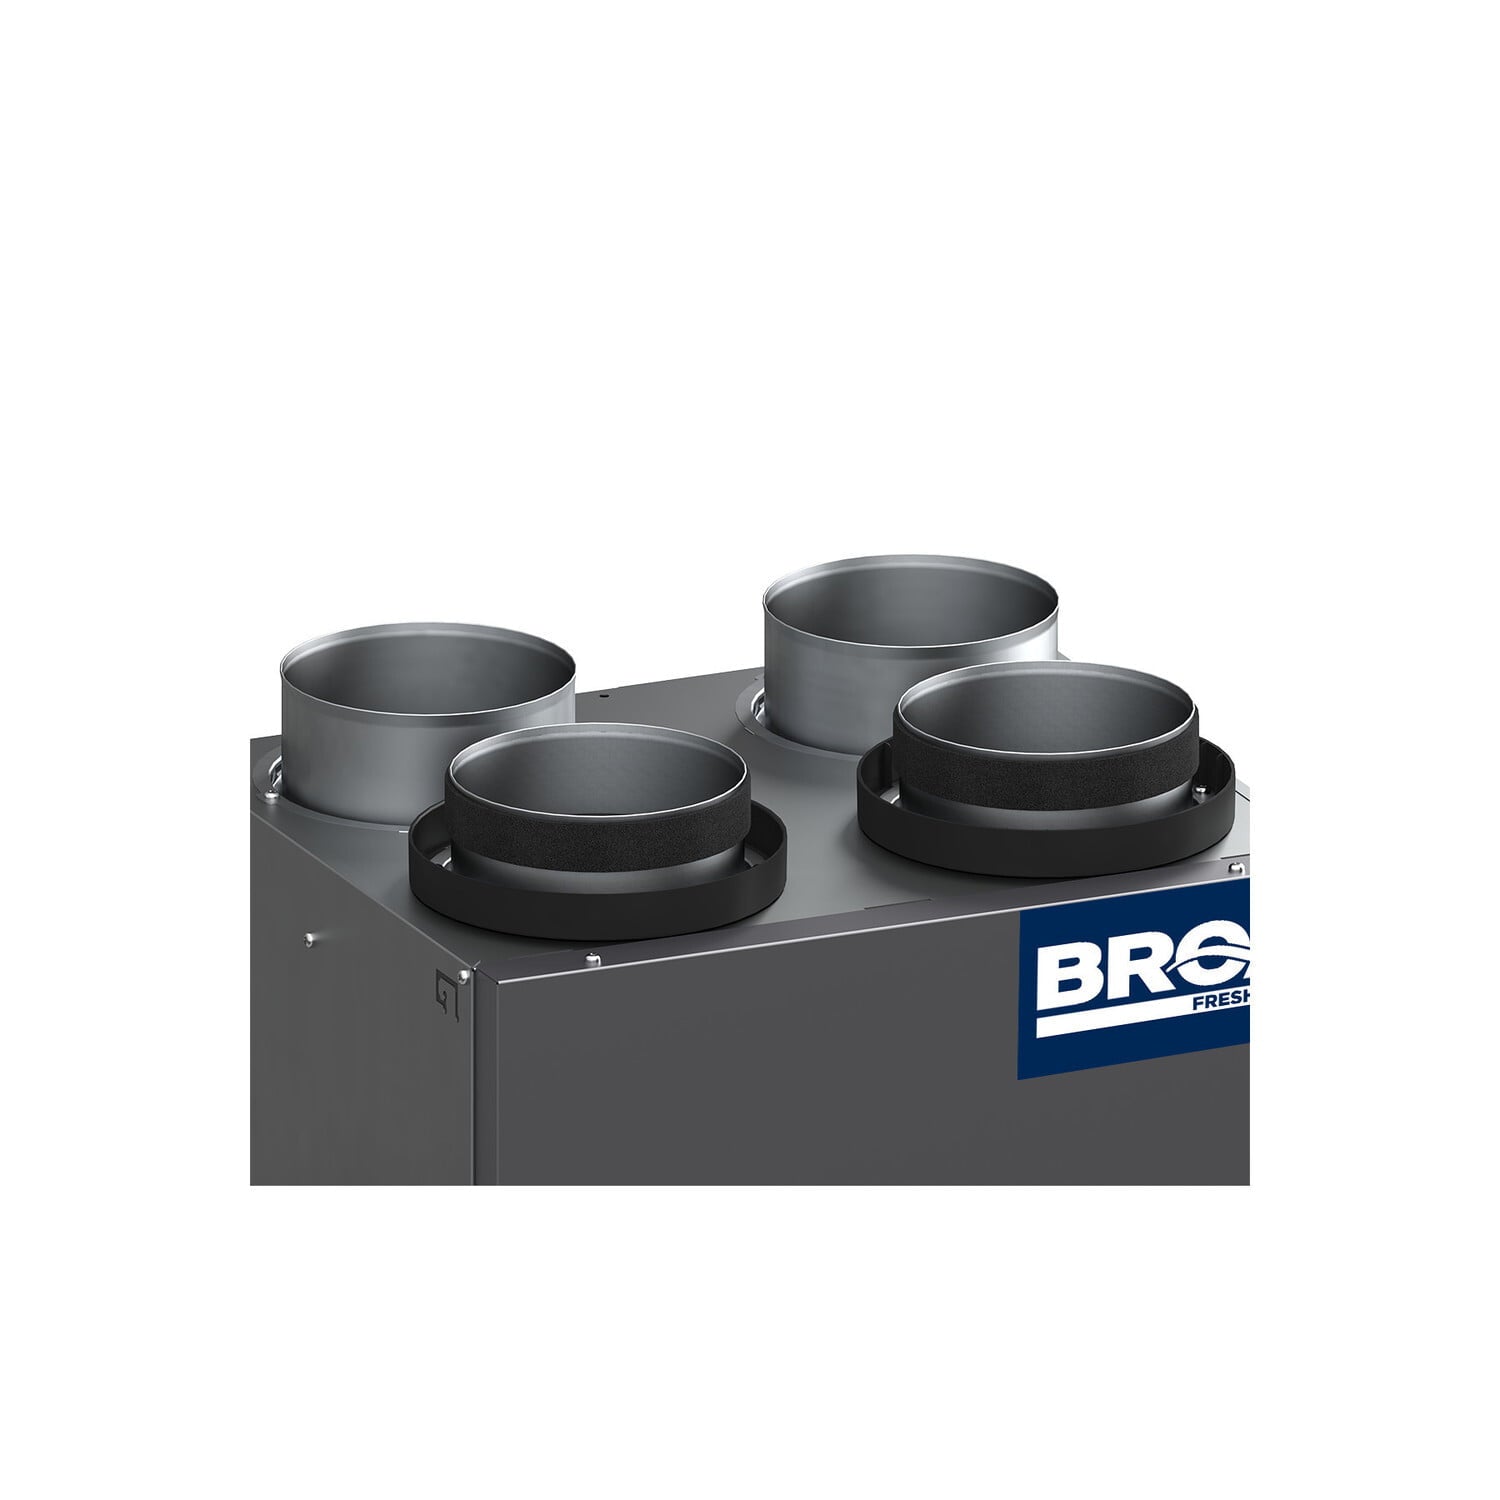 Broan B160E65RT Advanced Touchscreen Control